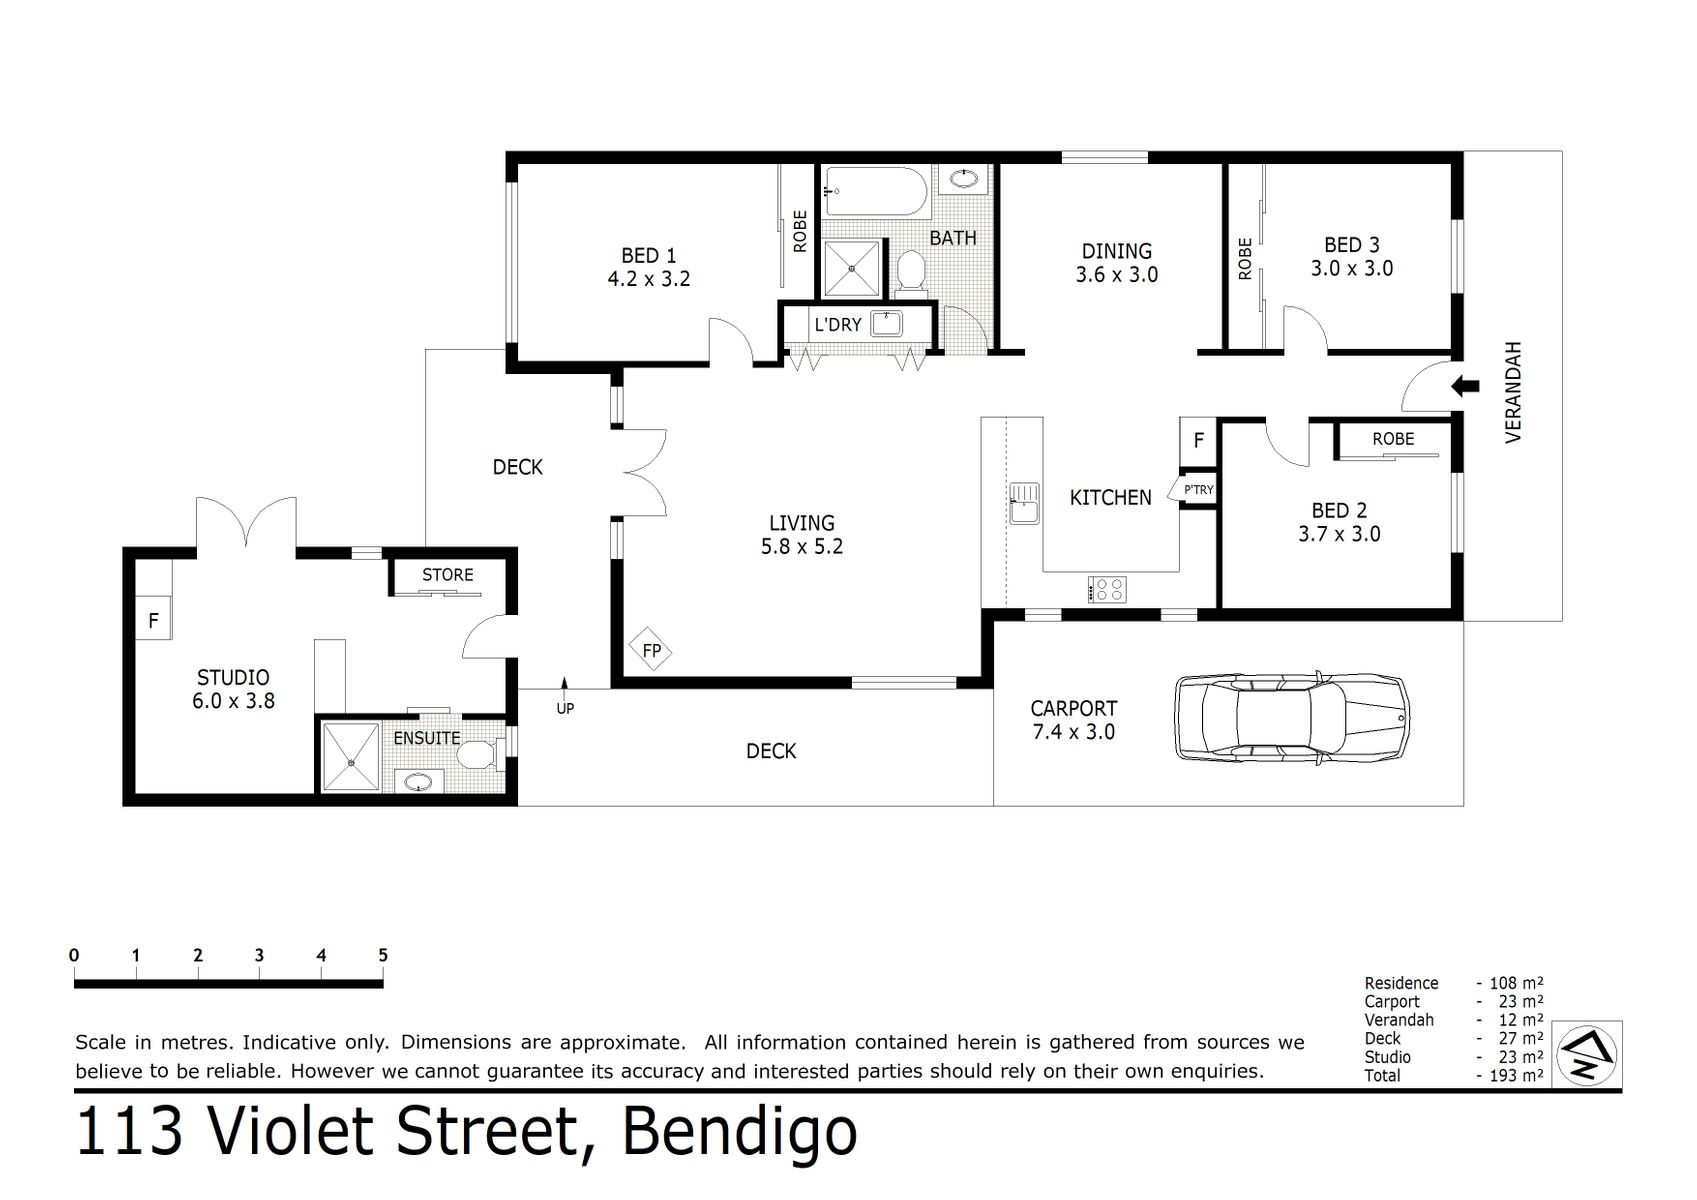 113 Violet Street Bendigo (04 JAN 2021) 108sqm